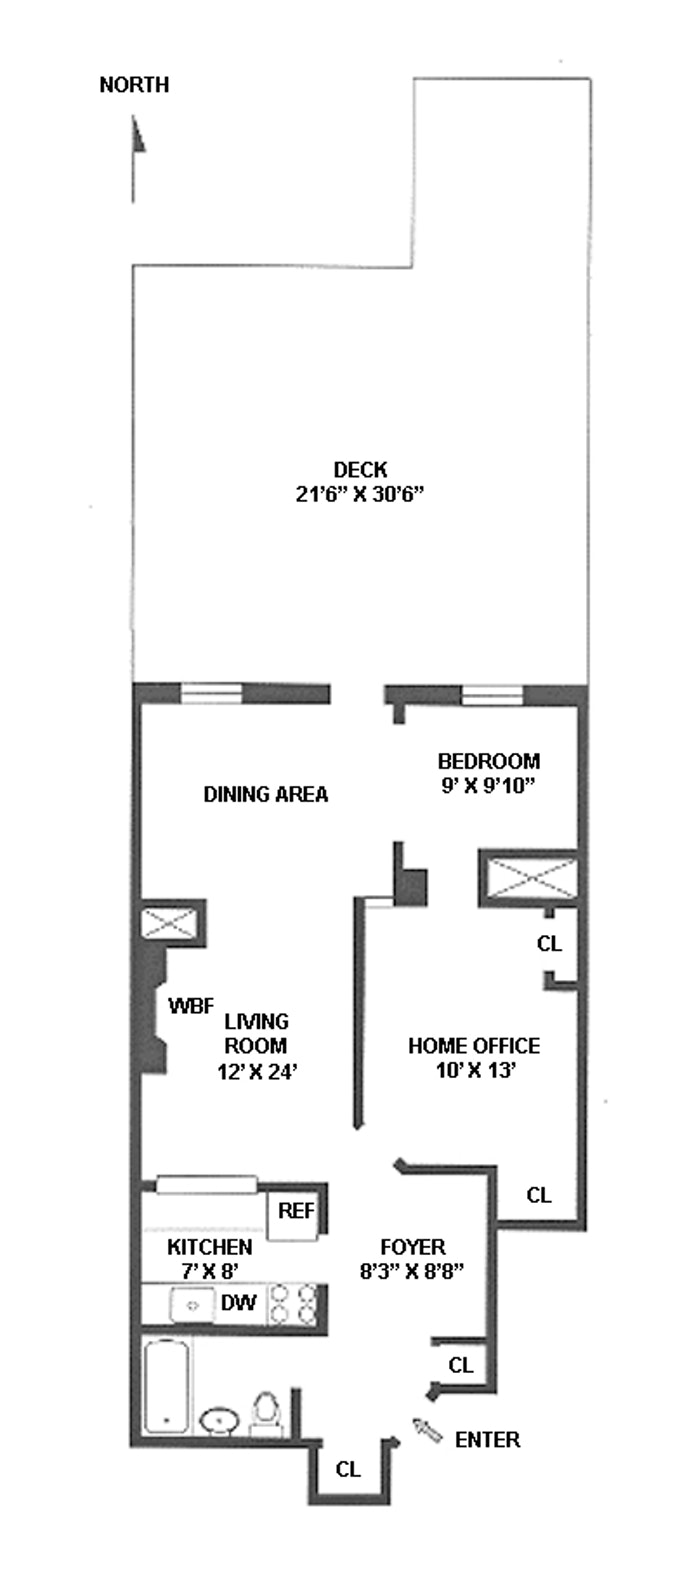 Floorplan for 161 Remsen Street, 2A